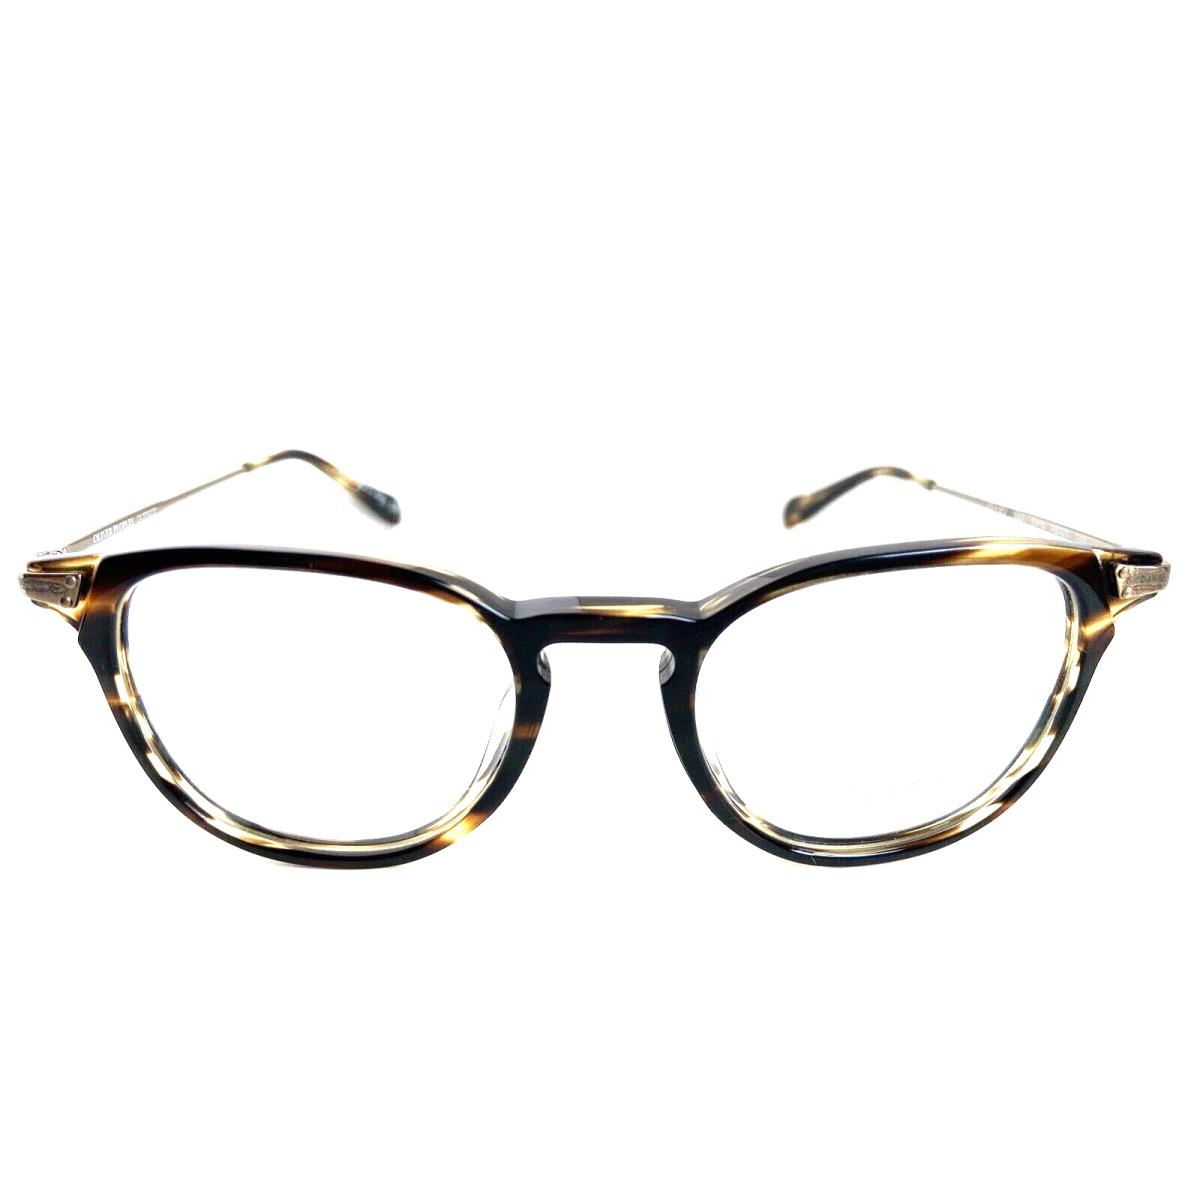 Oliver Peoples OV 5264 1003 Ennis Round Cocobolo 48mm Eyeglasses Italy